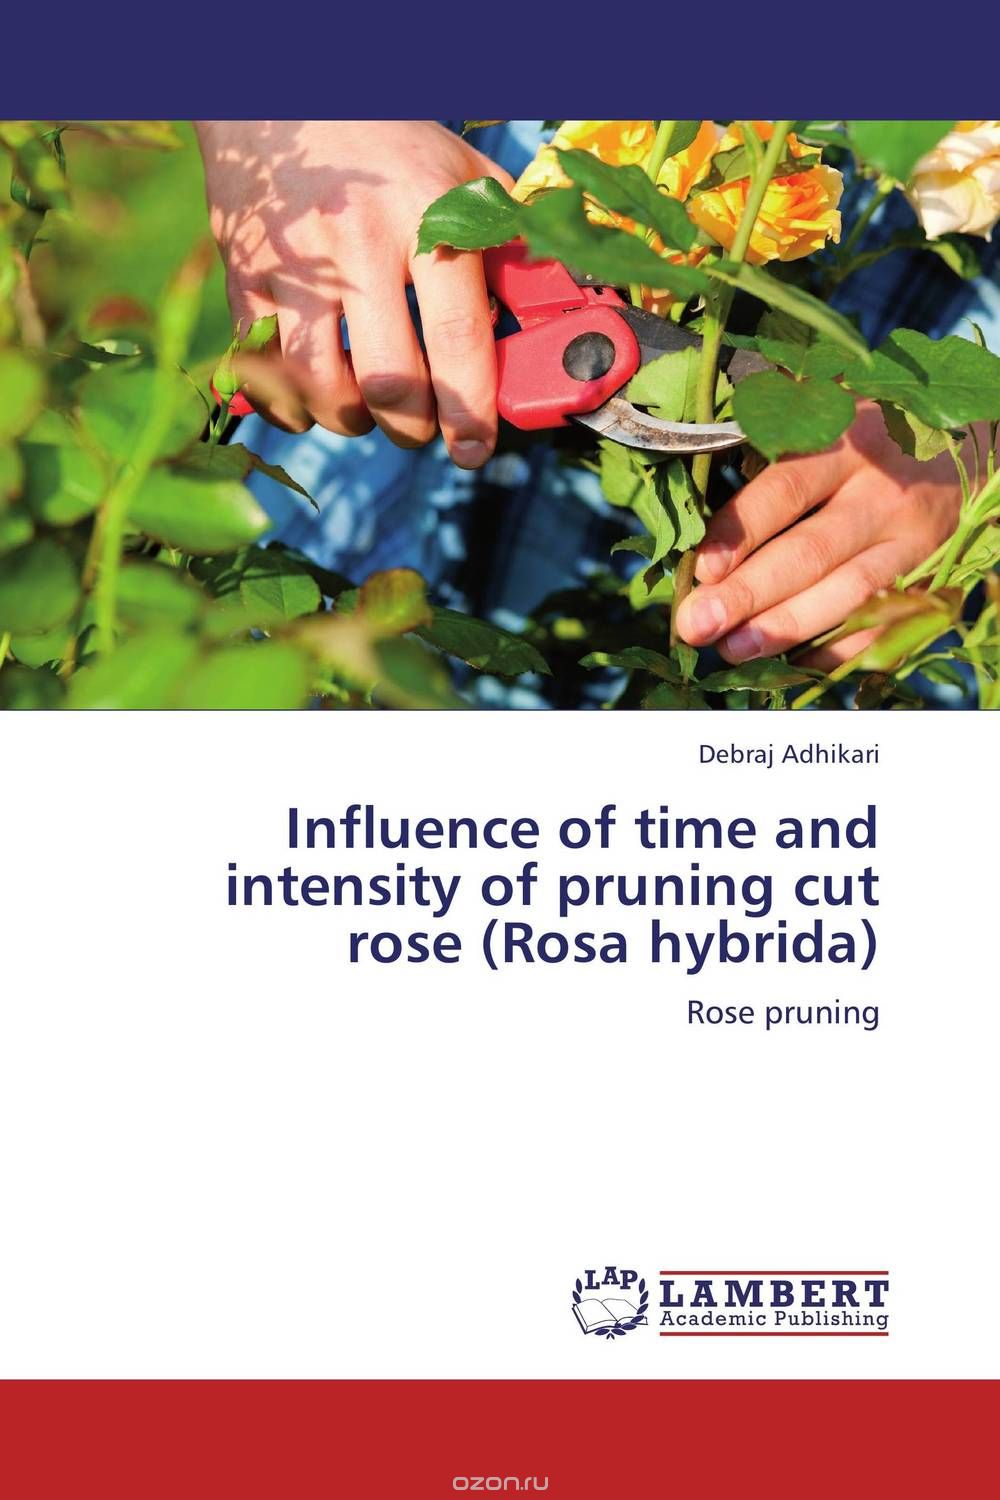 Скачать книгу "Influence of time and intensity of pruning cut rose  (Rosa hybrida)"